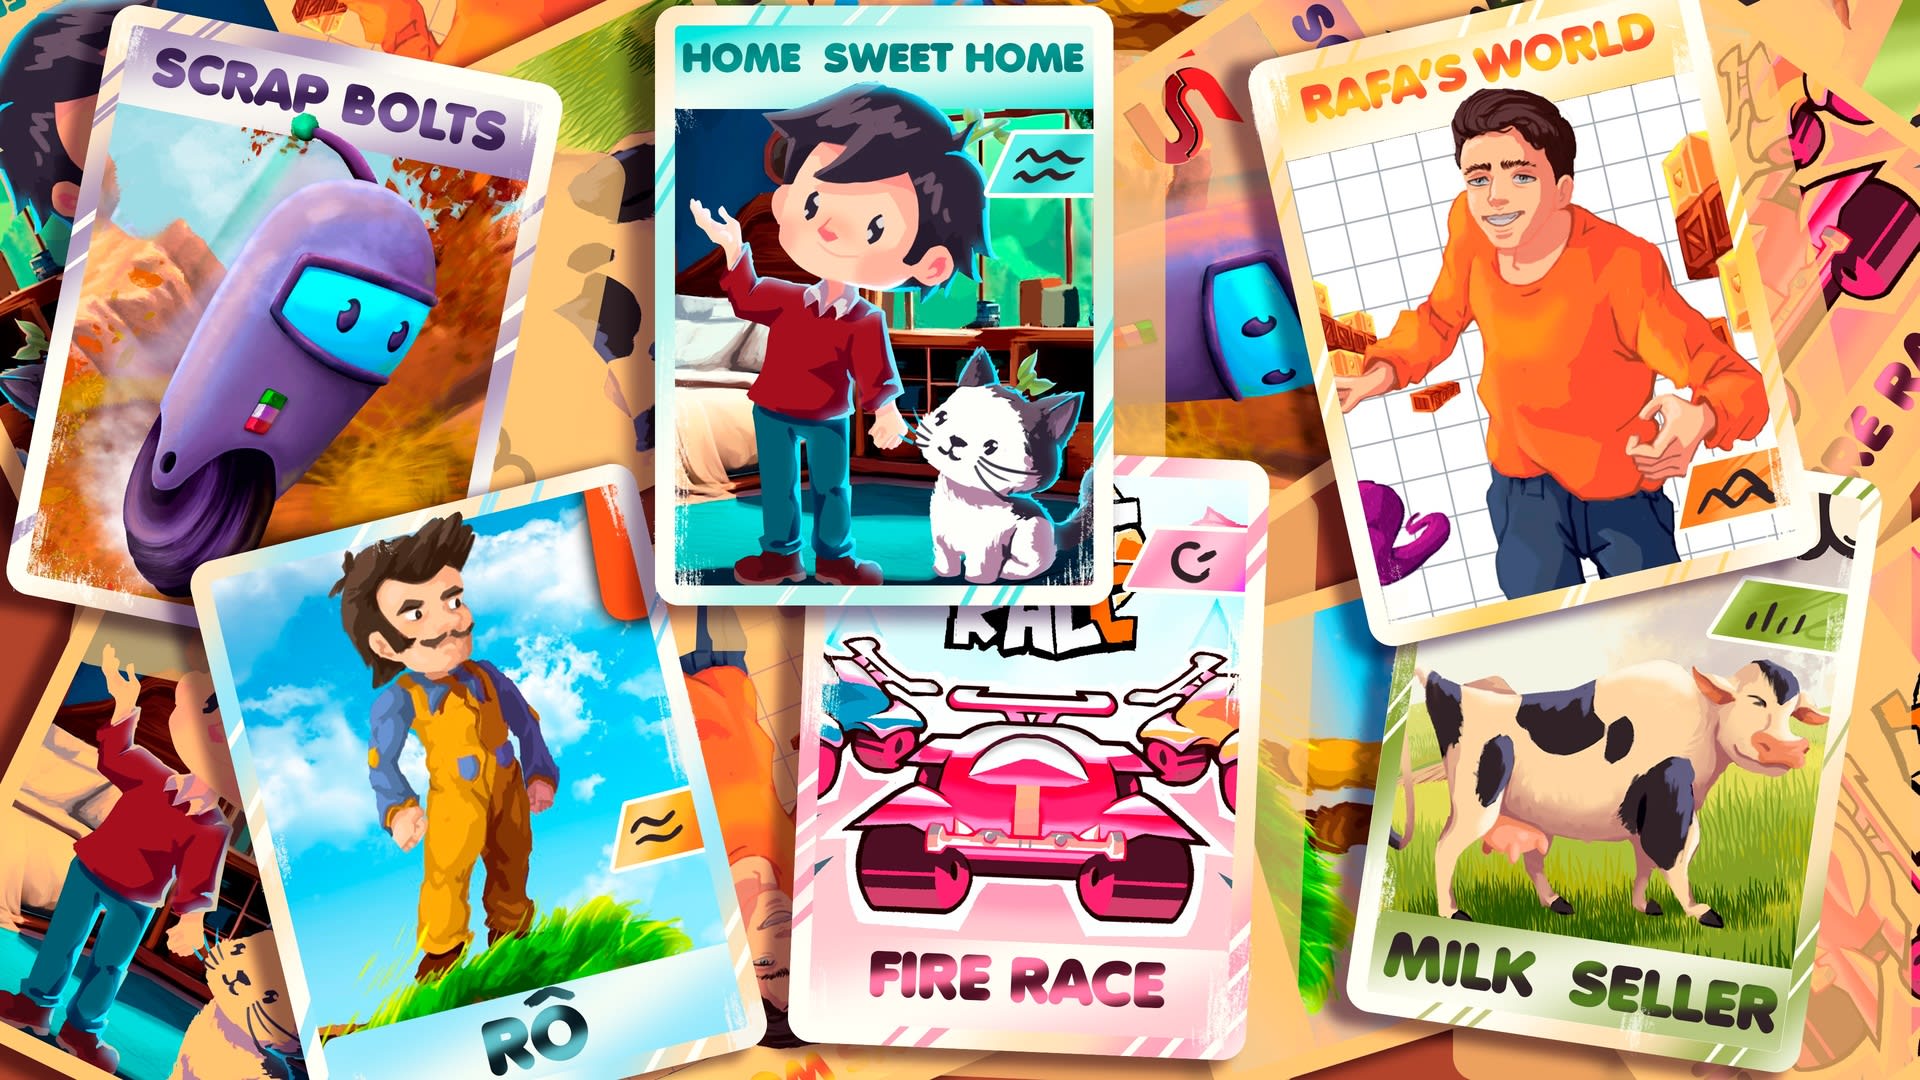 Rô + Fire Race + Scrap Bolts + Milk Seller + Home Sweet Home + Rafa´s World